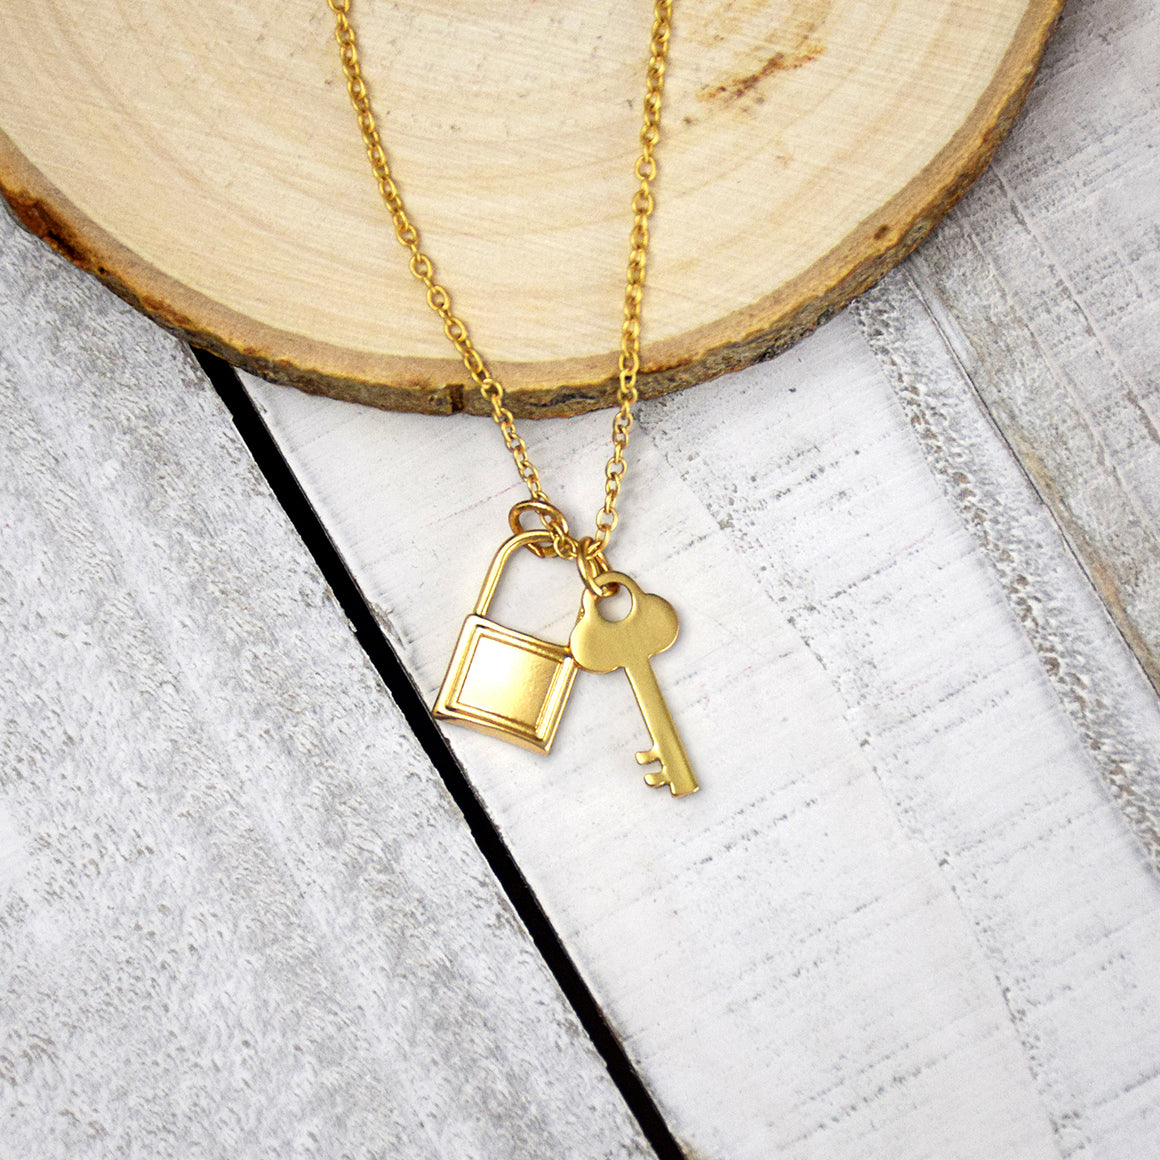 Dainty Lock & Key Necklace - Gold Finish Charm Necklace